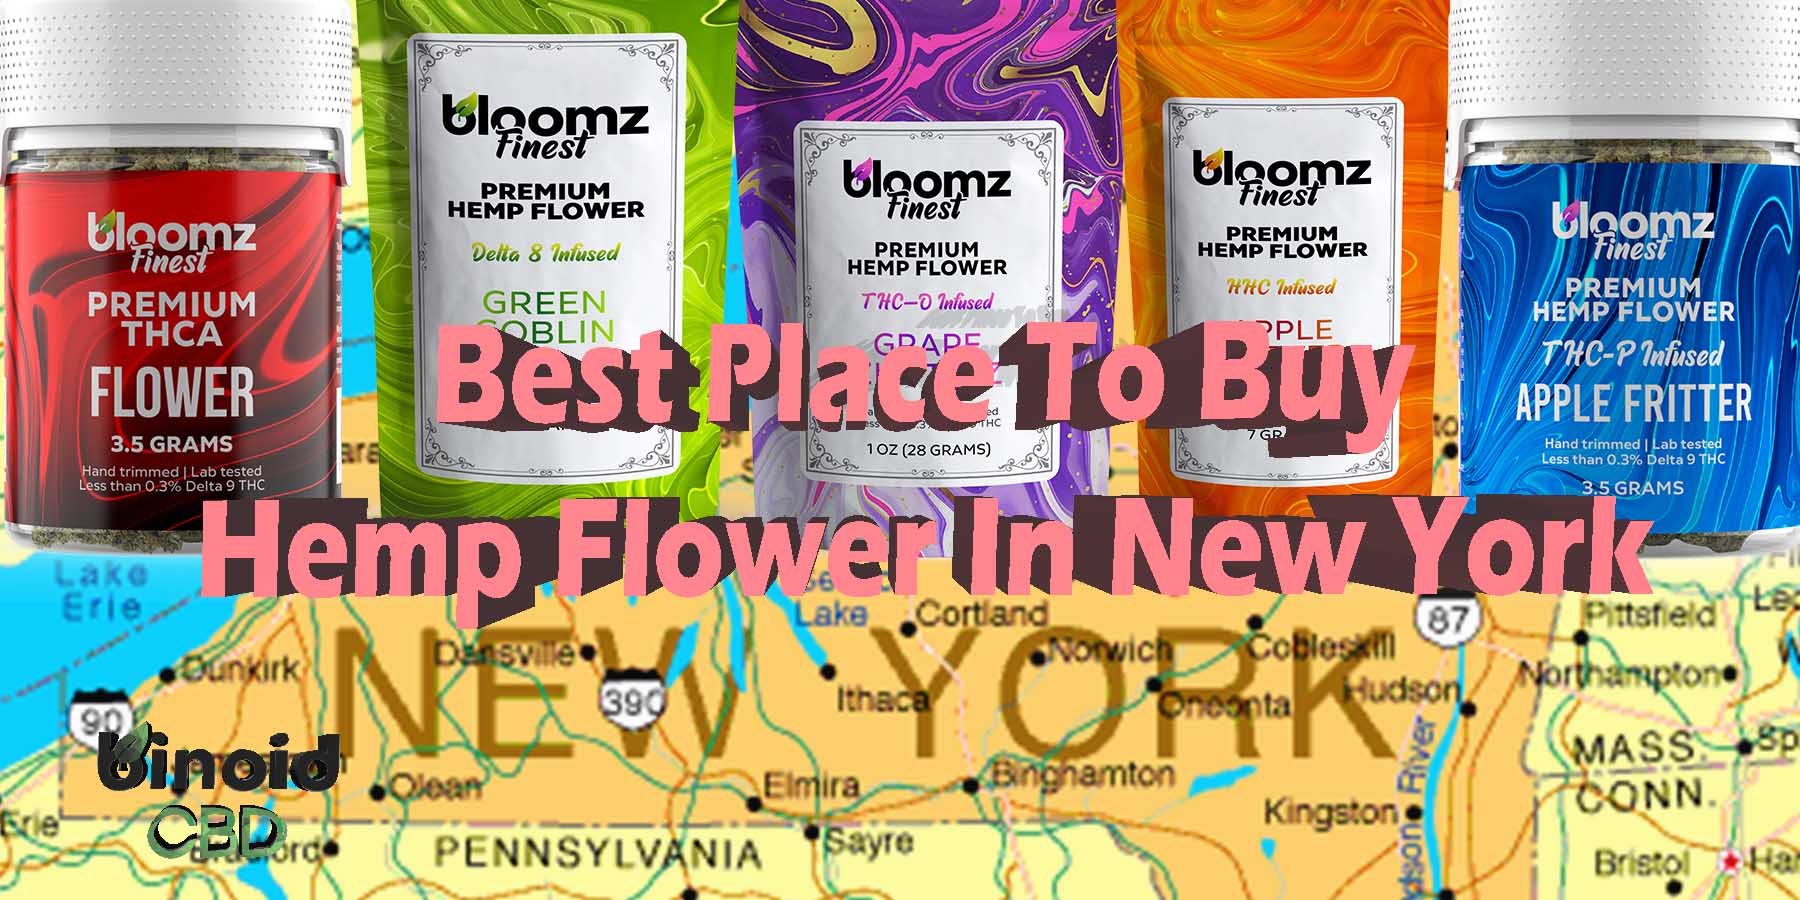 Buy Hemp Flower New York Joints PreRolls Get Online Near Me For Sale Best Brand Strongest Real Legal Store Shop Reddit